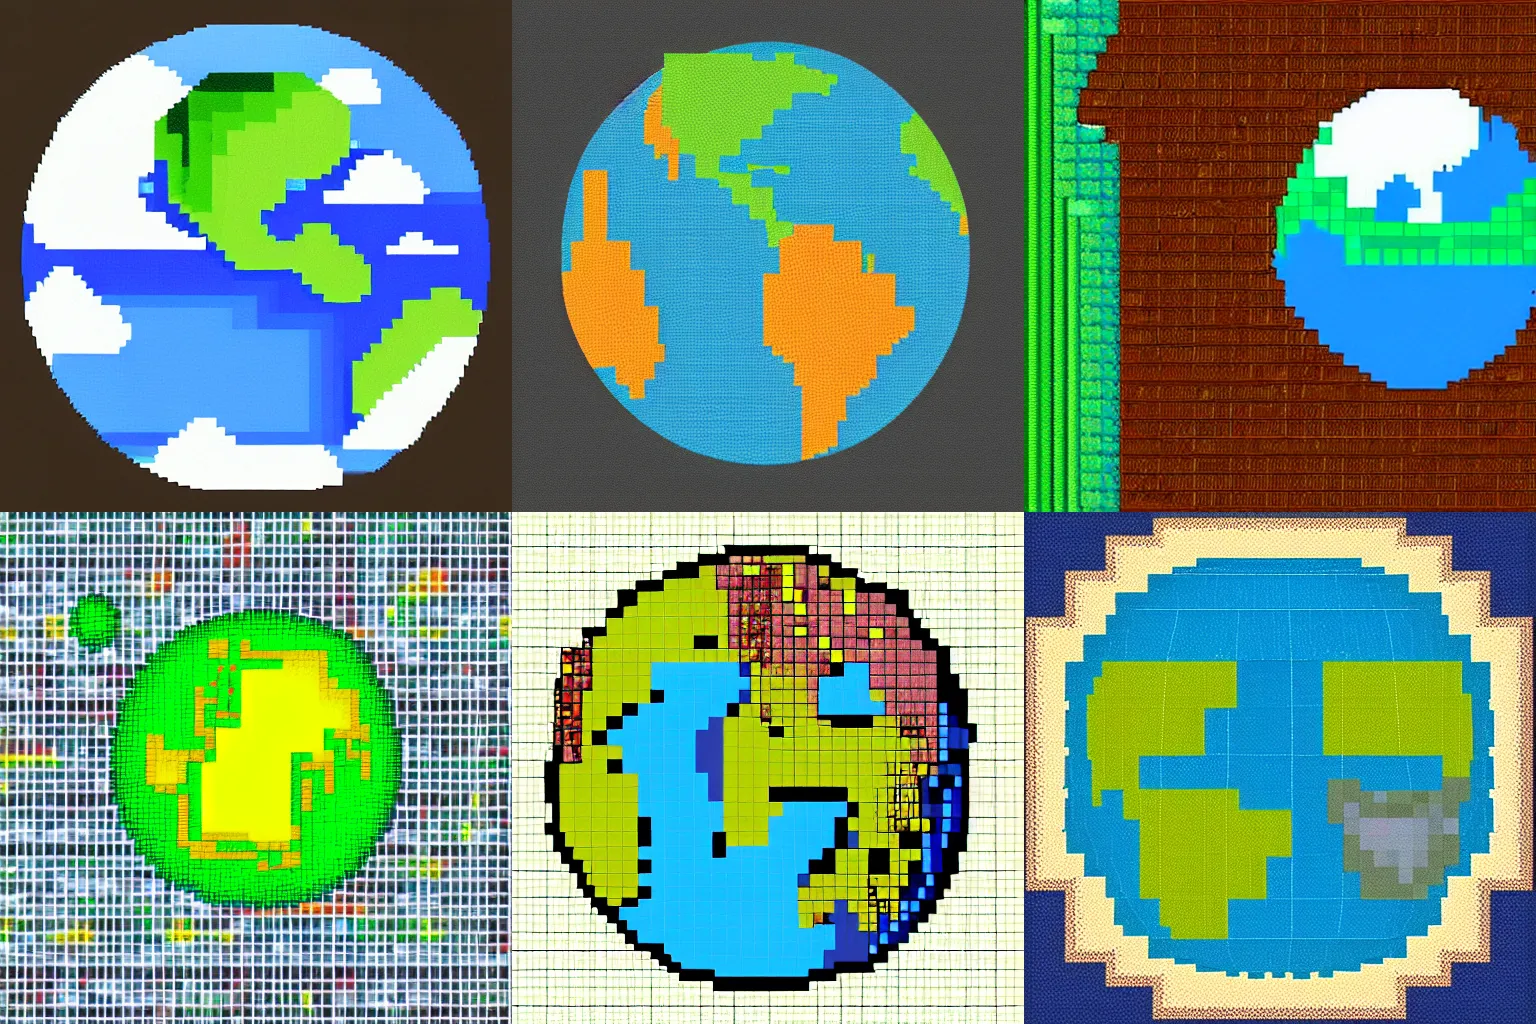 Prompt: pixel art illustration of Earth